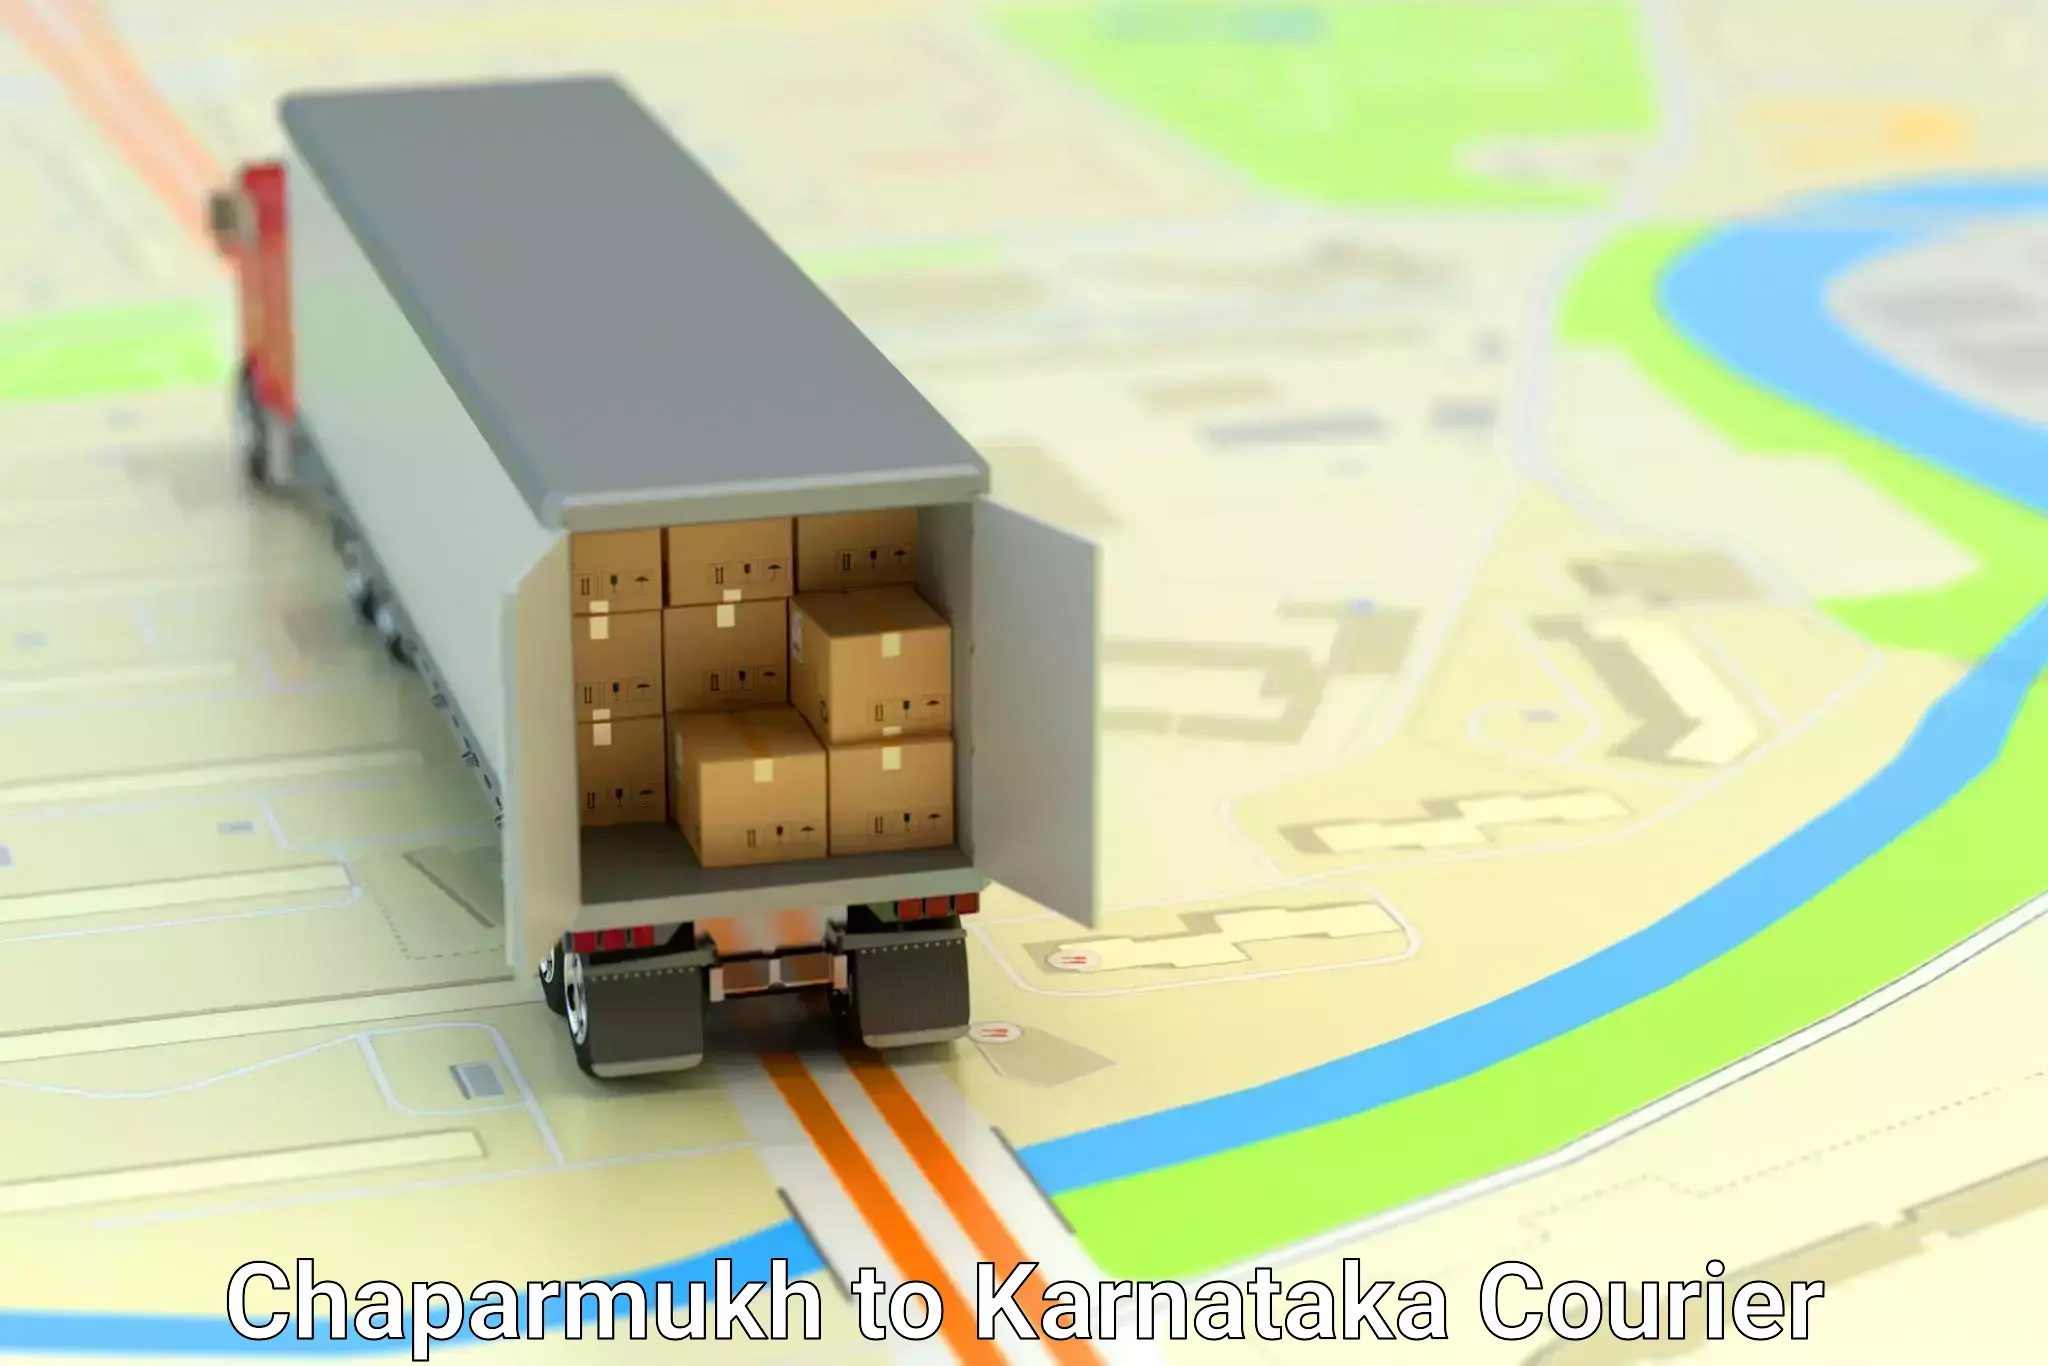 High-speed parcel service Chaparmukh to Karnataka